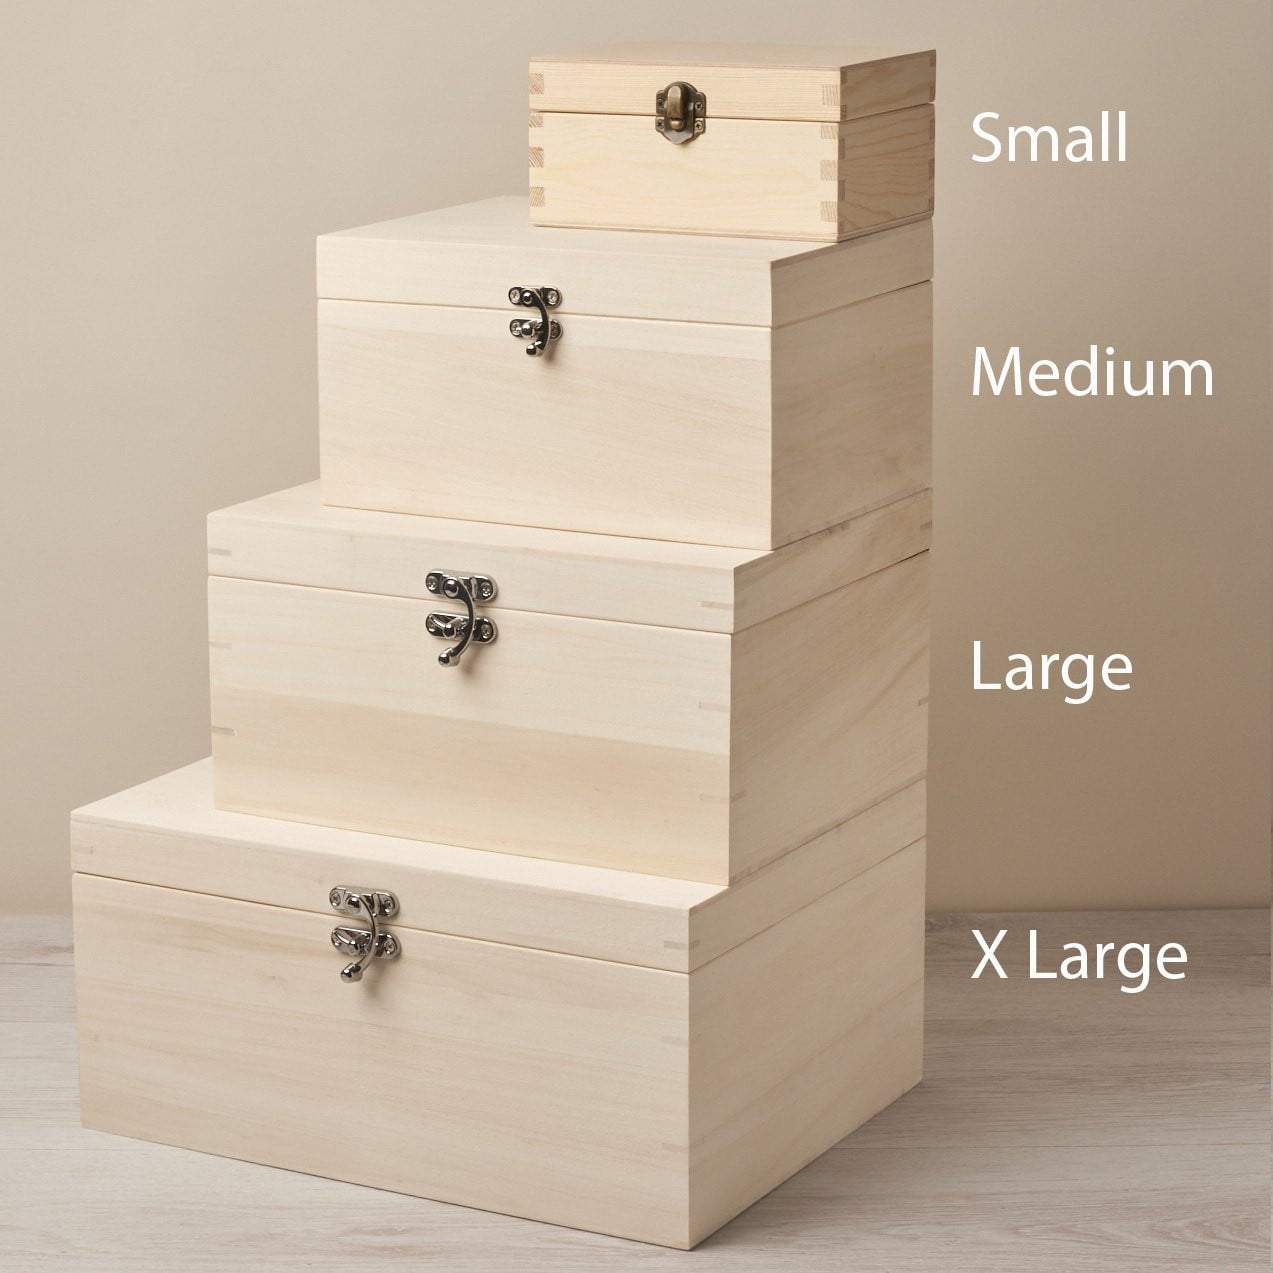 Keepsake Box - Personalised Wooden Pet Memorial Box - Engraved Photo